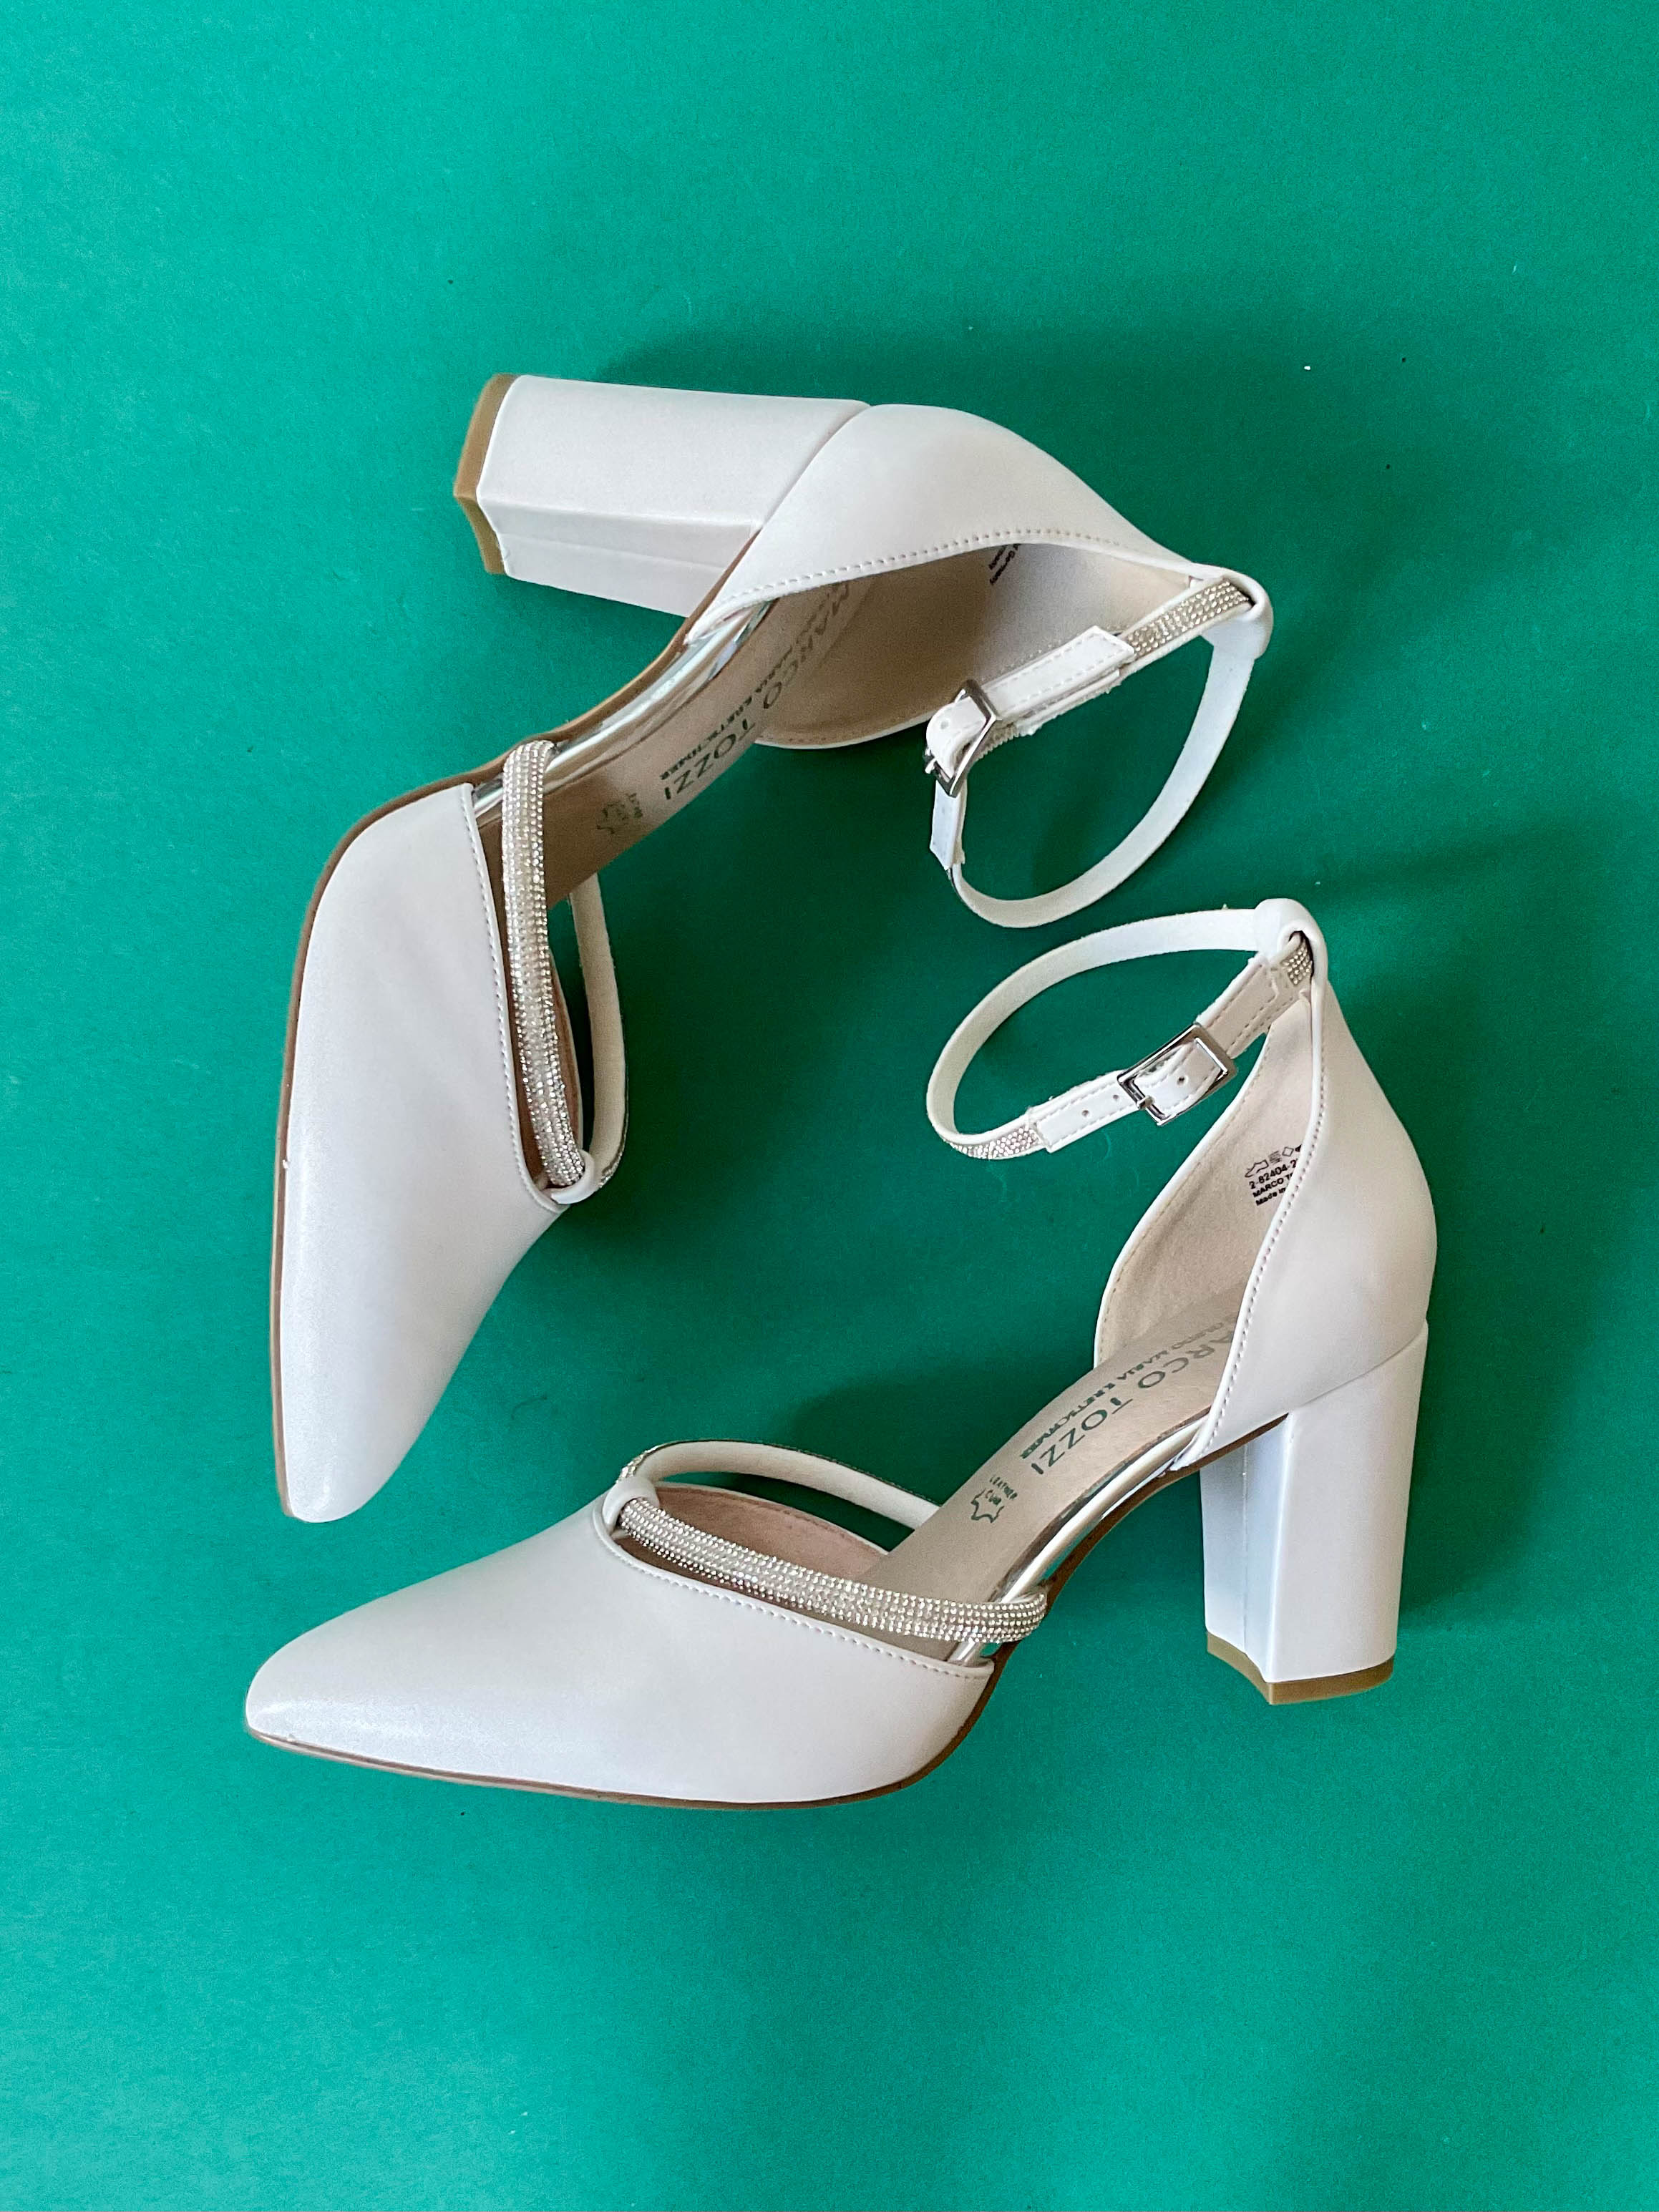 white low heels